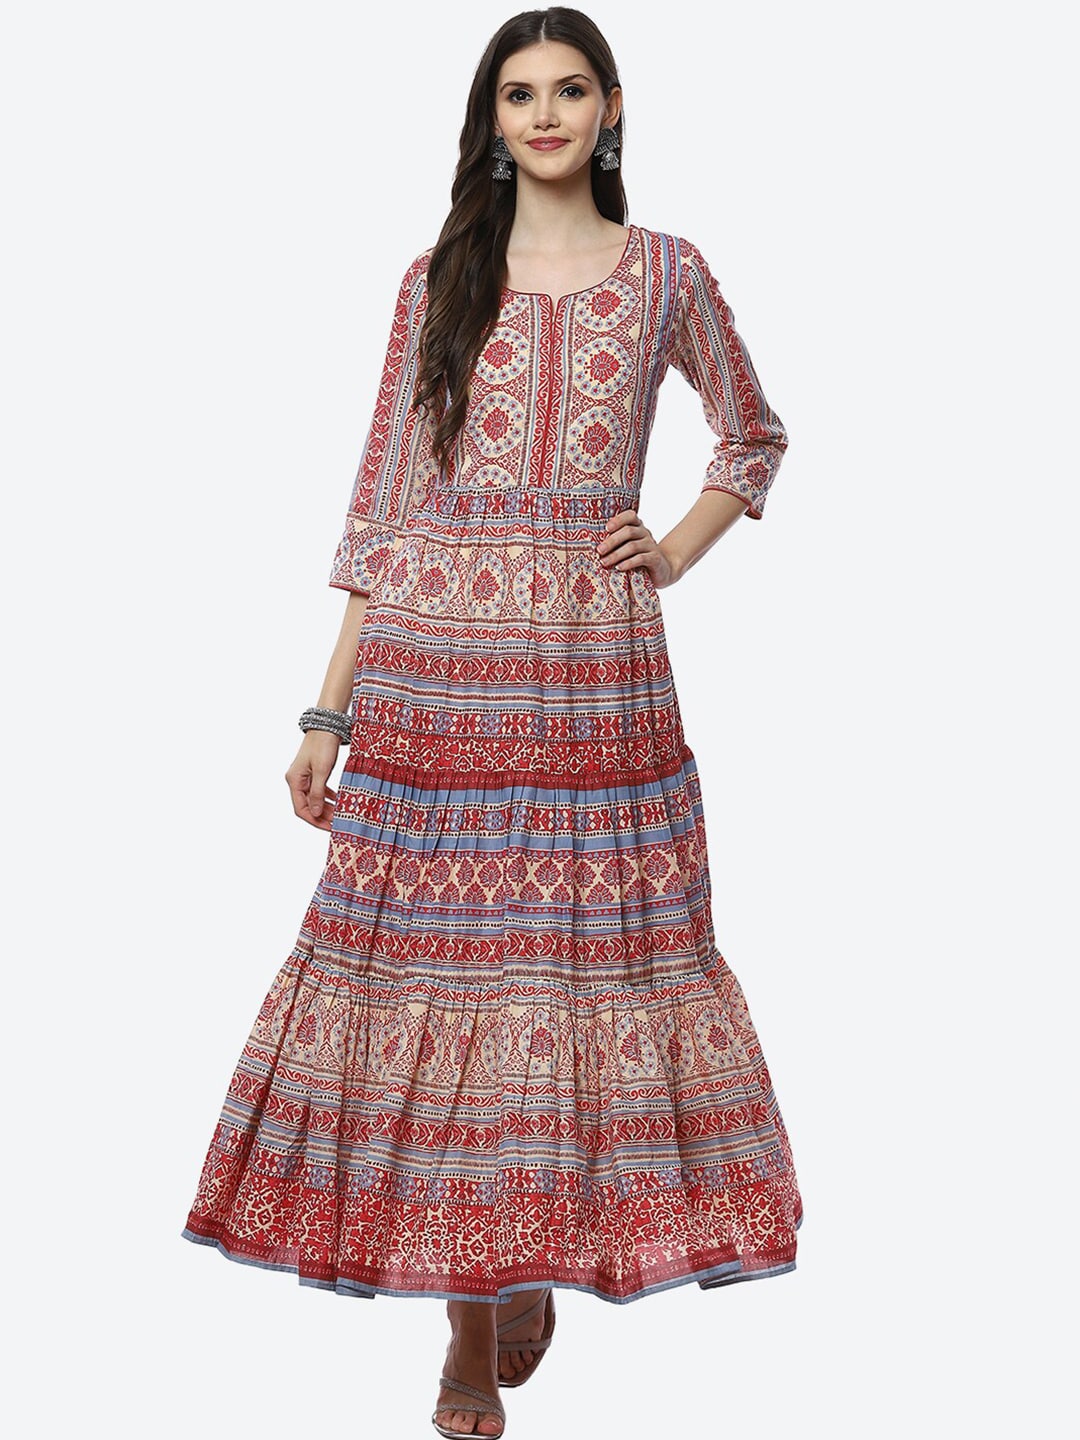 Biba Cream-Coloured & Red Ethnic Motifs Maxi Dress Price in India